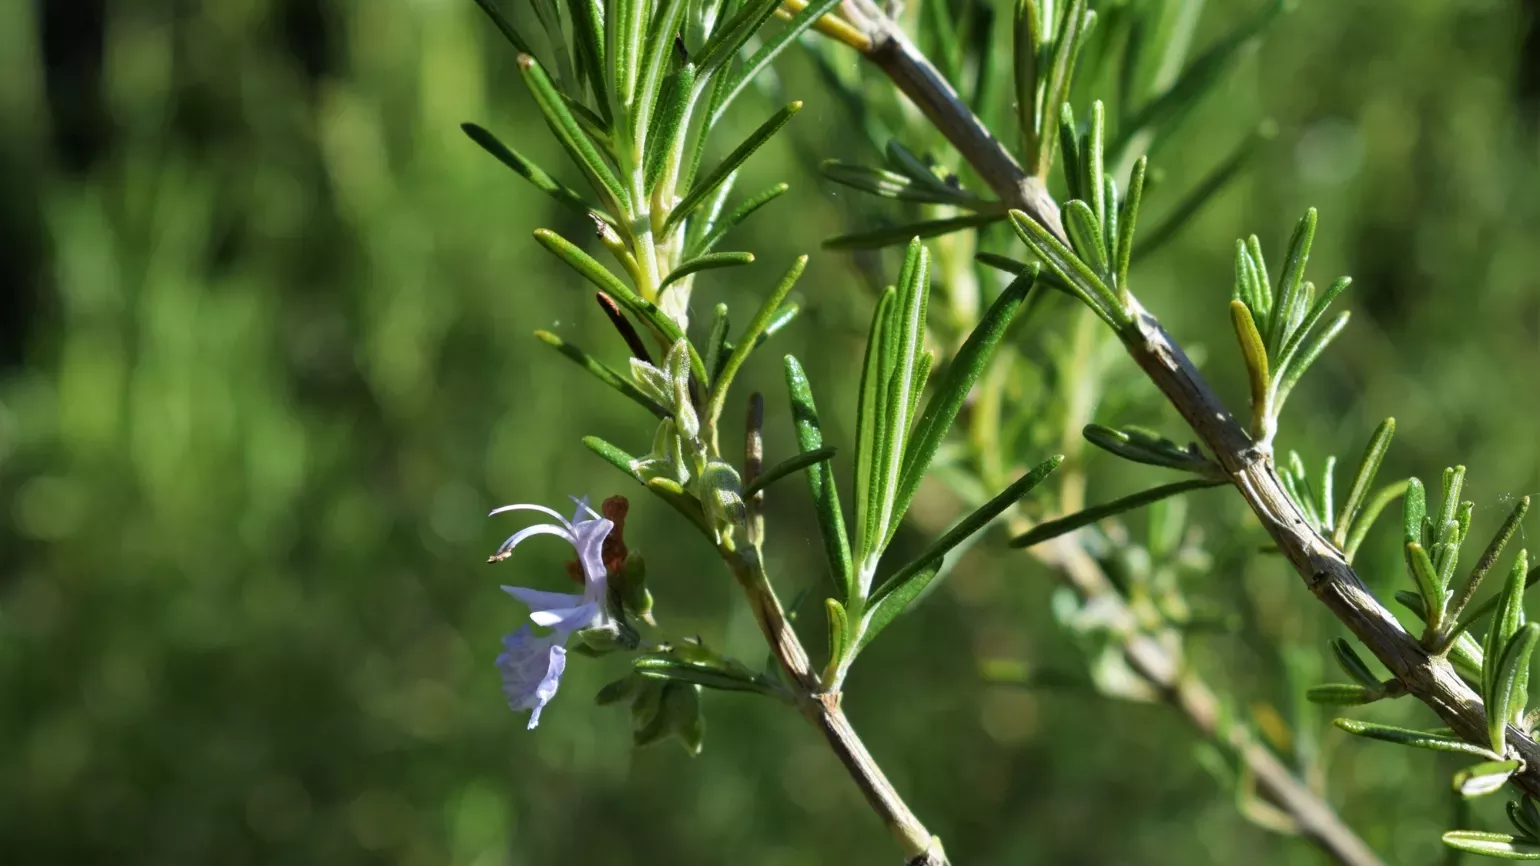 Green, needle-like leaves and purplish-blue flower of rosemary